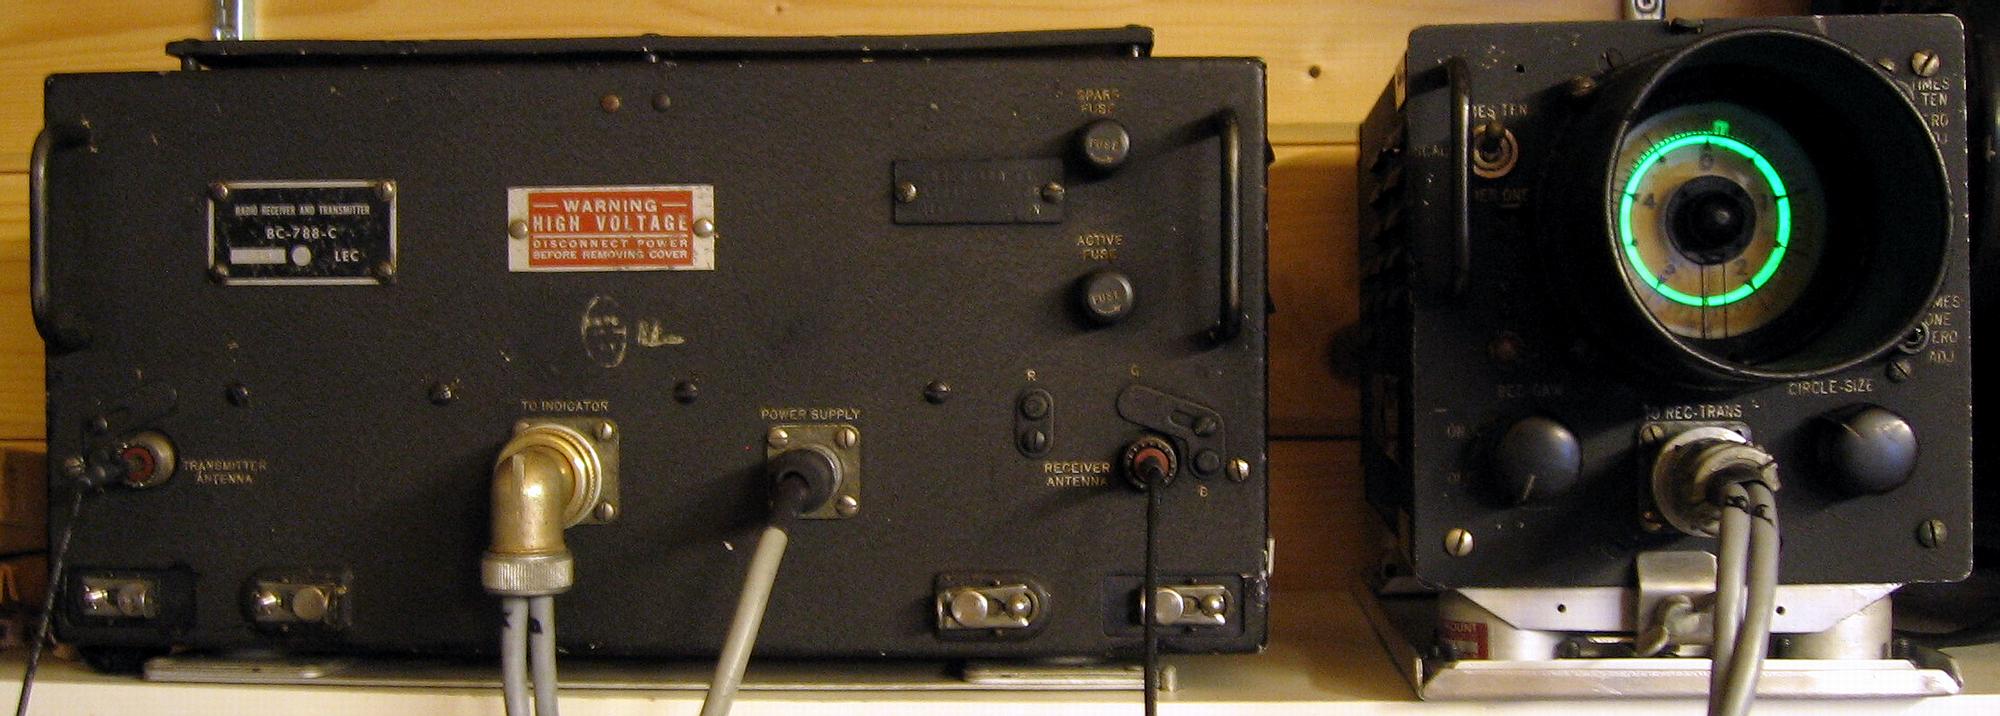 BC--788 Radio Altimeter.JPG